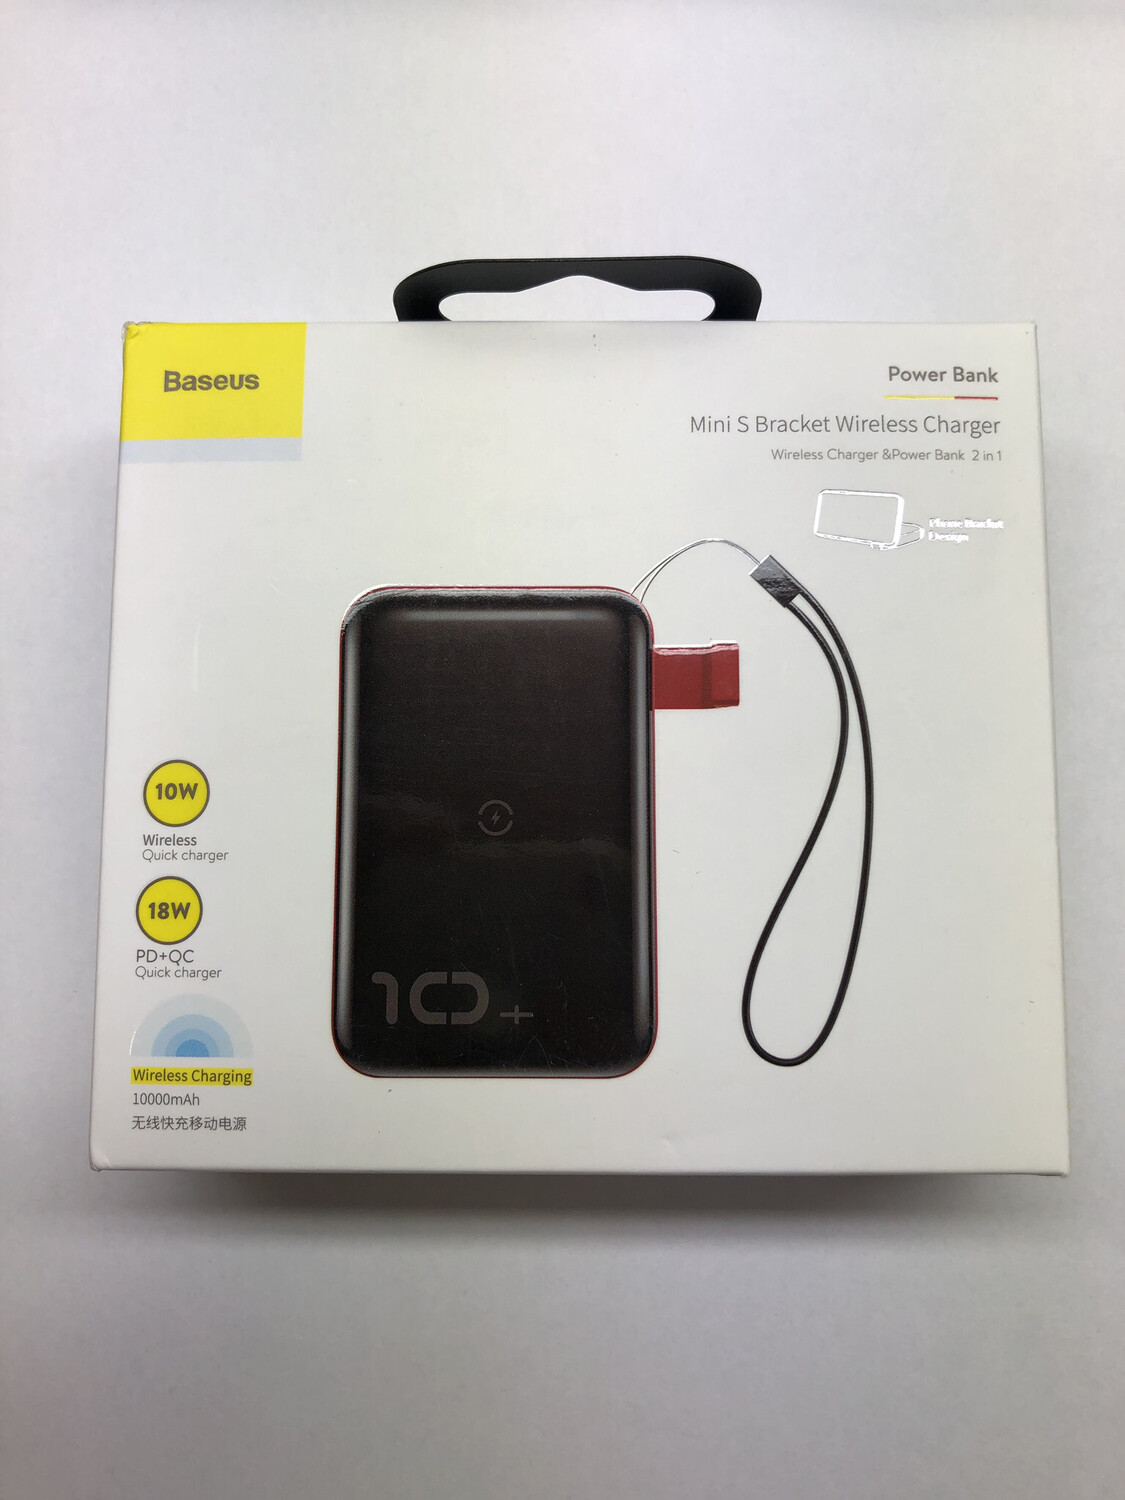 Baseus Power Bank (Mini S Bracket Wireless Charger 2in1)